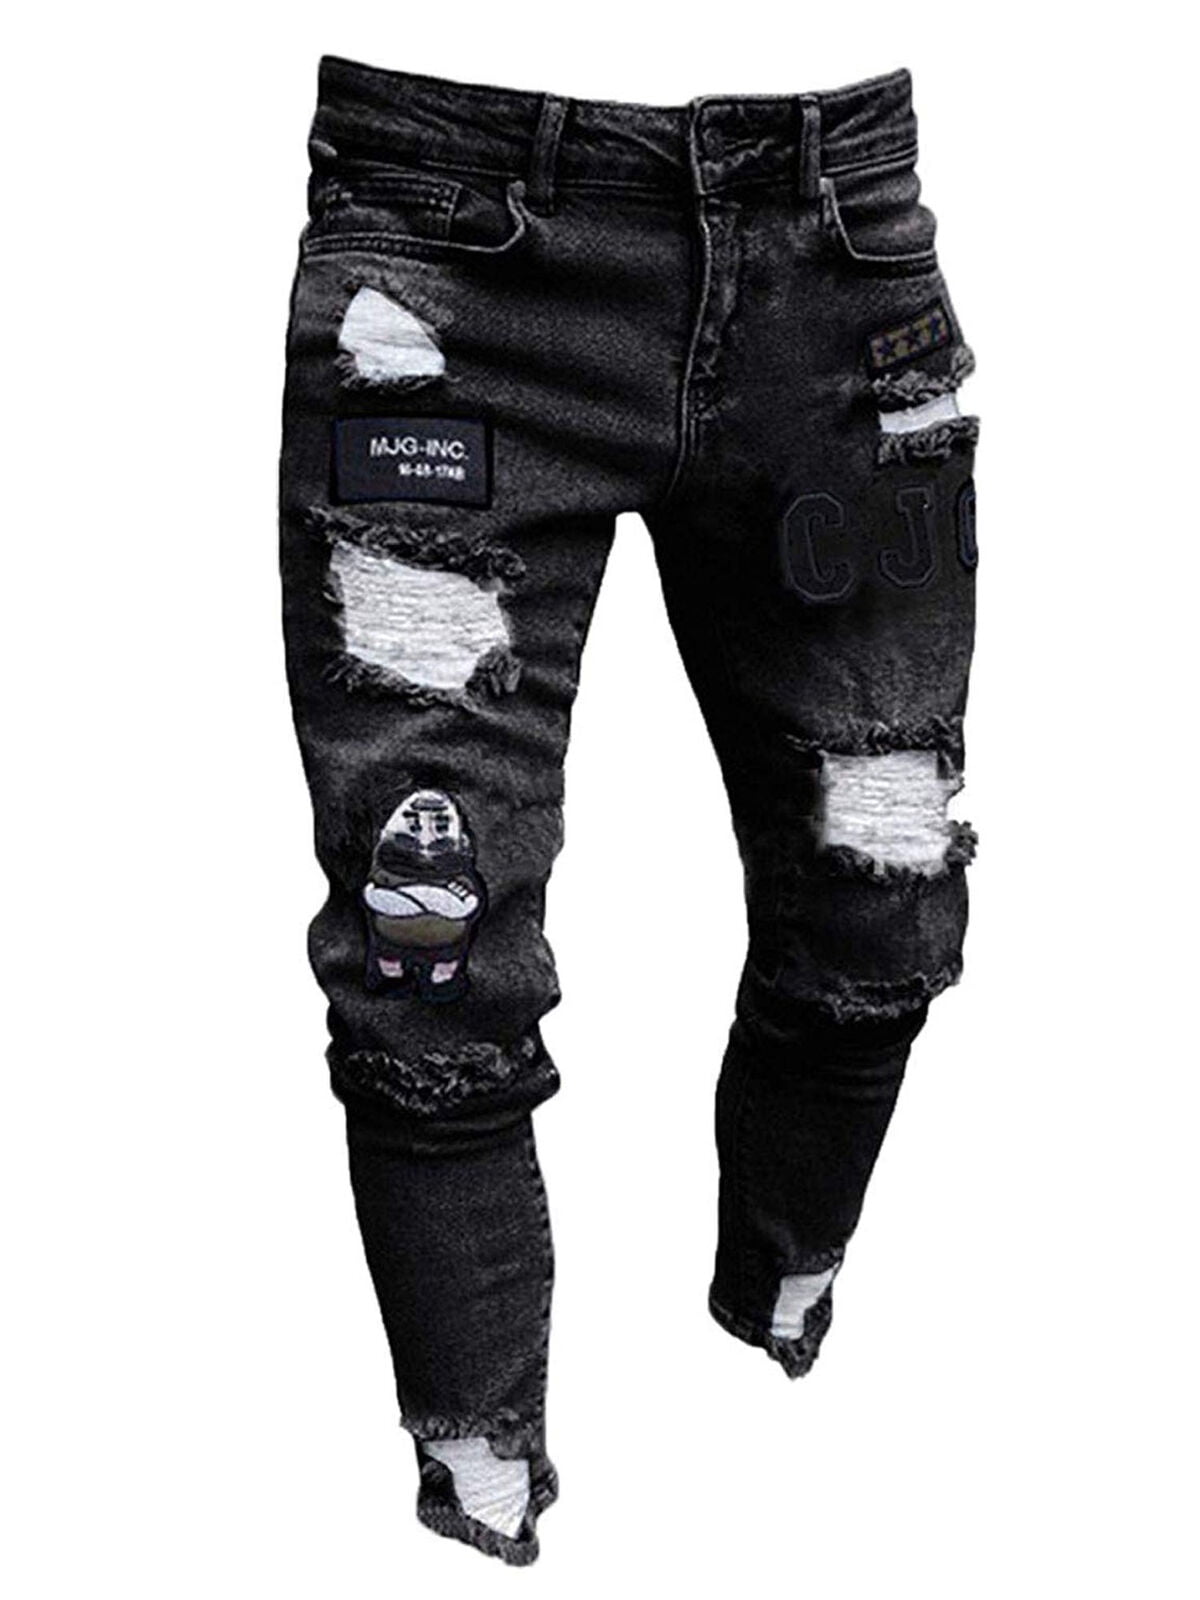 Fashion Rugged Jeans For Men -black/grey @ Best Price Online | Jumia Kenya-saigonsouth.com.vn